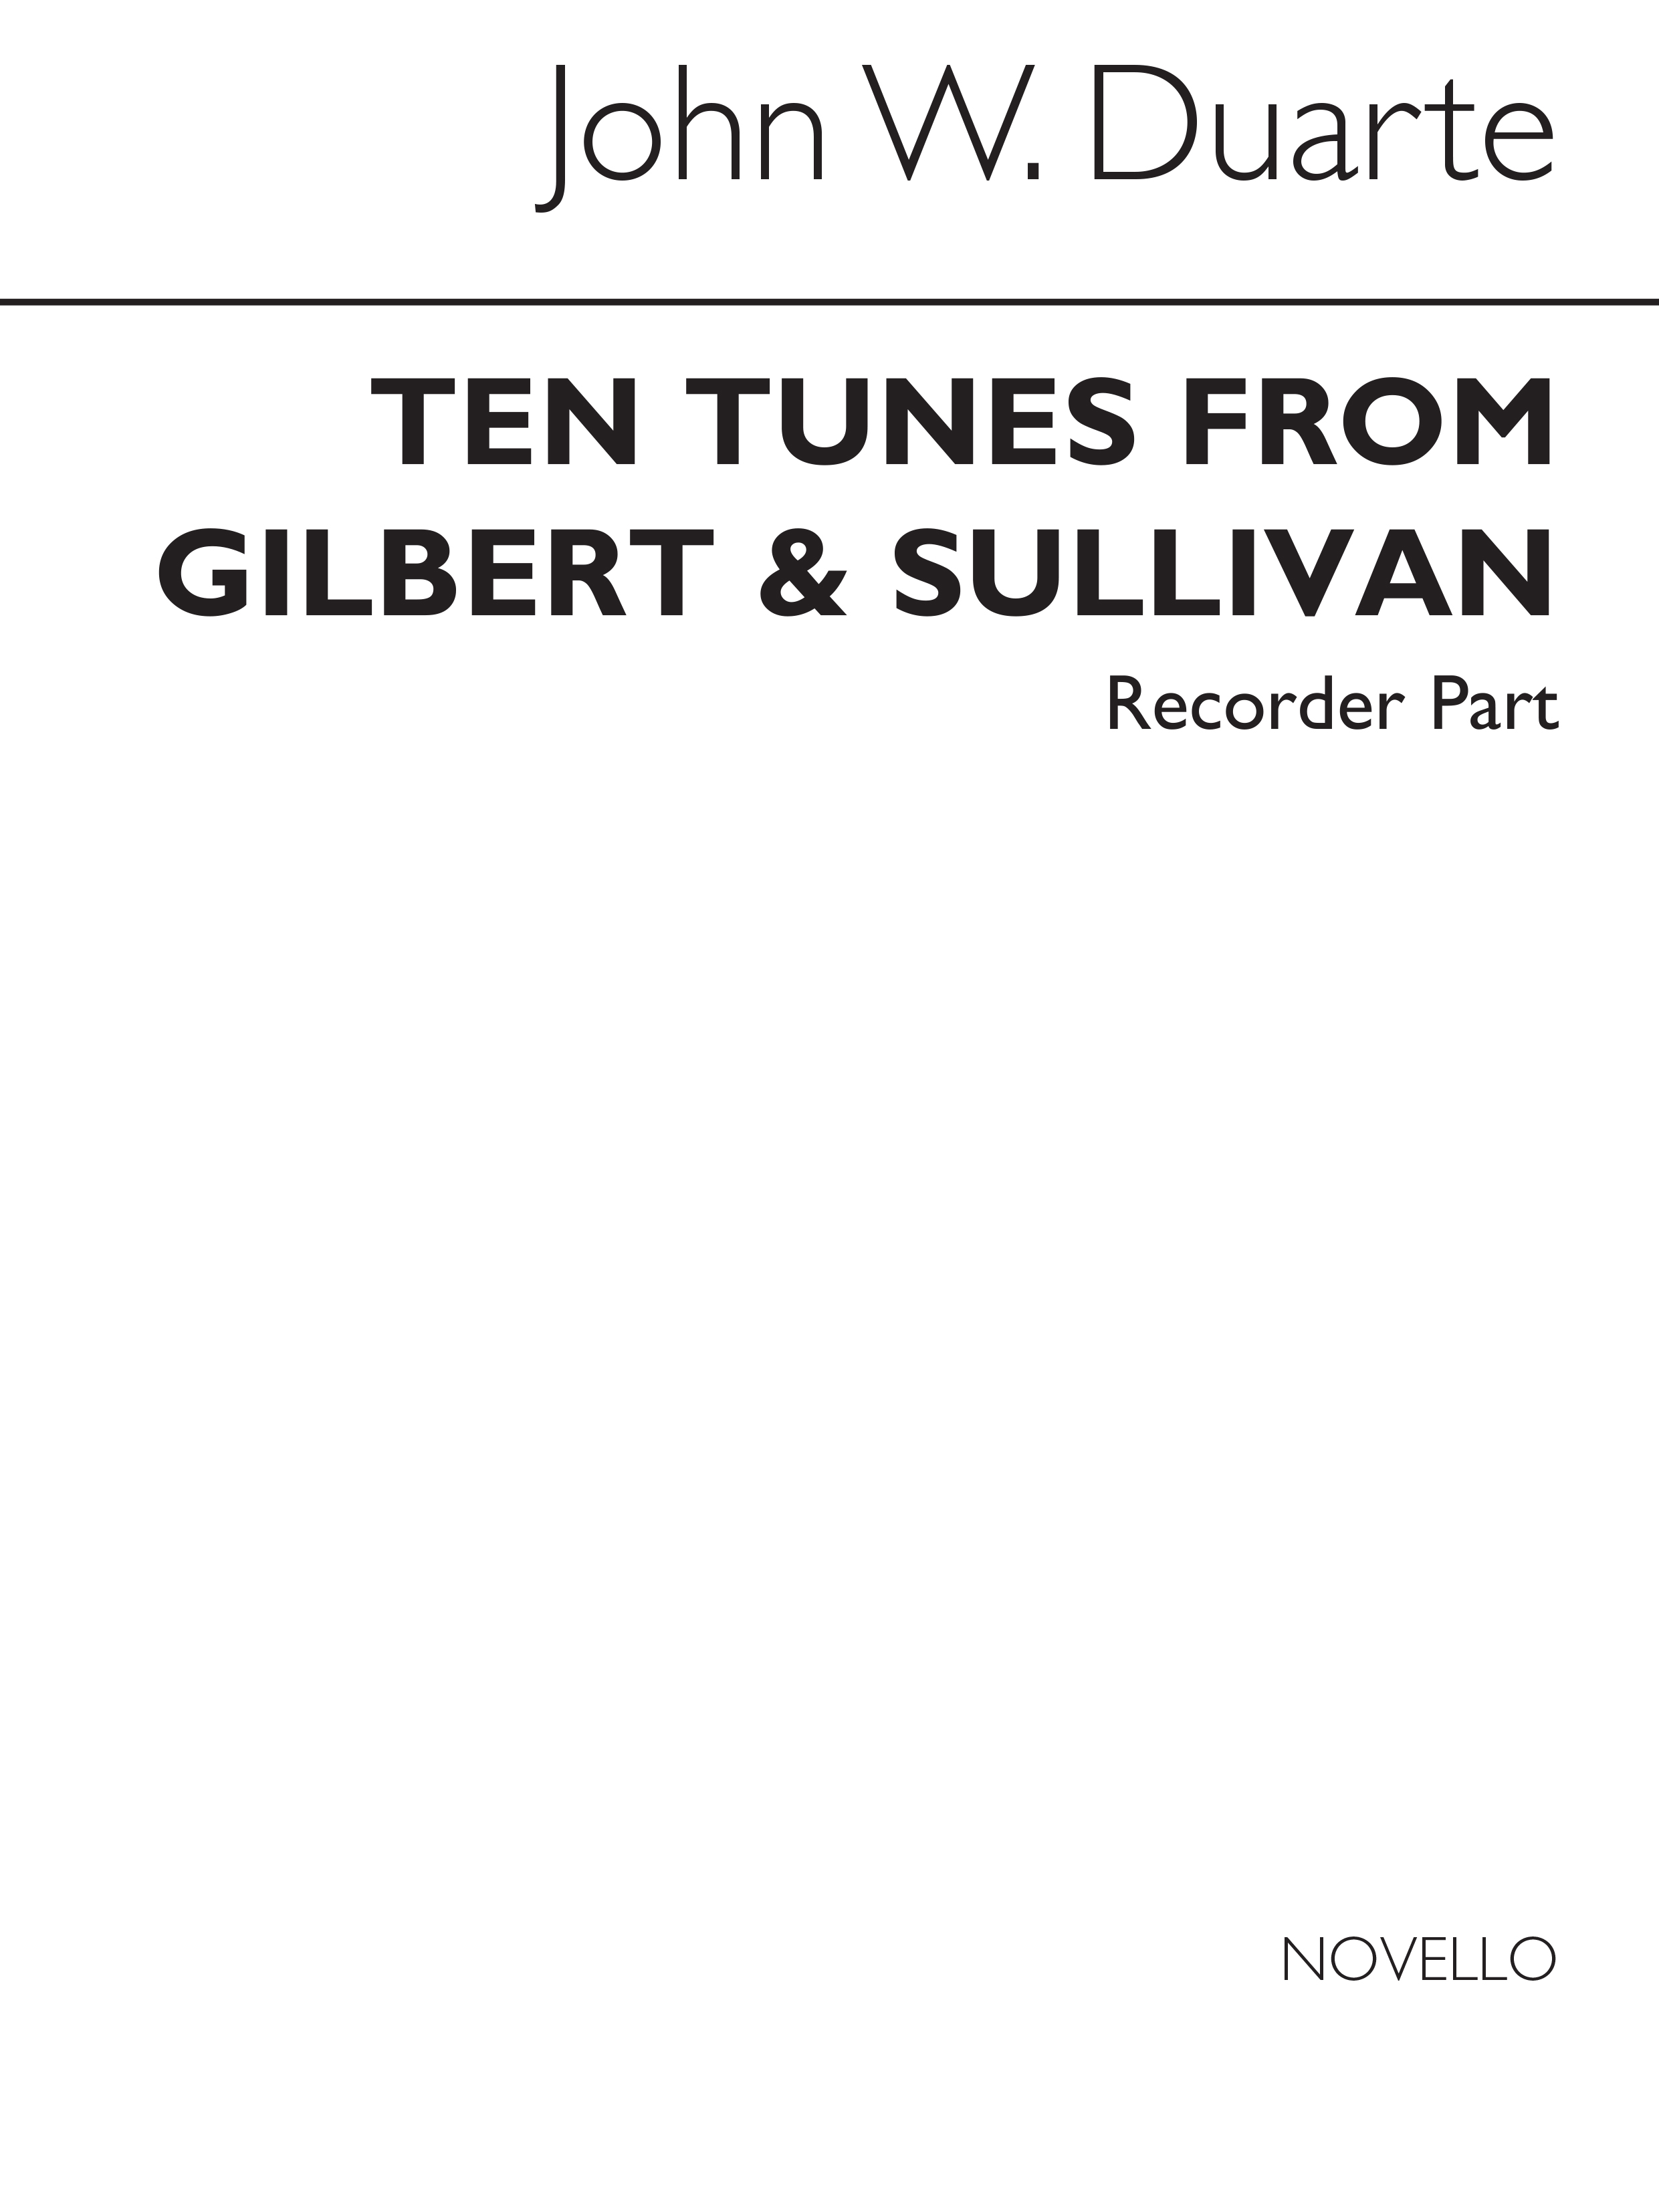 Duarte: Ten Tunes From Gilbert & Sullivan (Recorder Part)